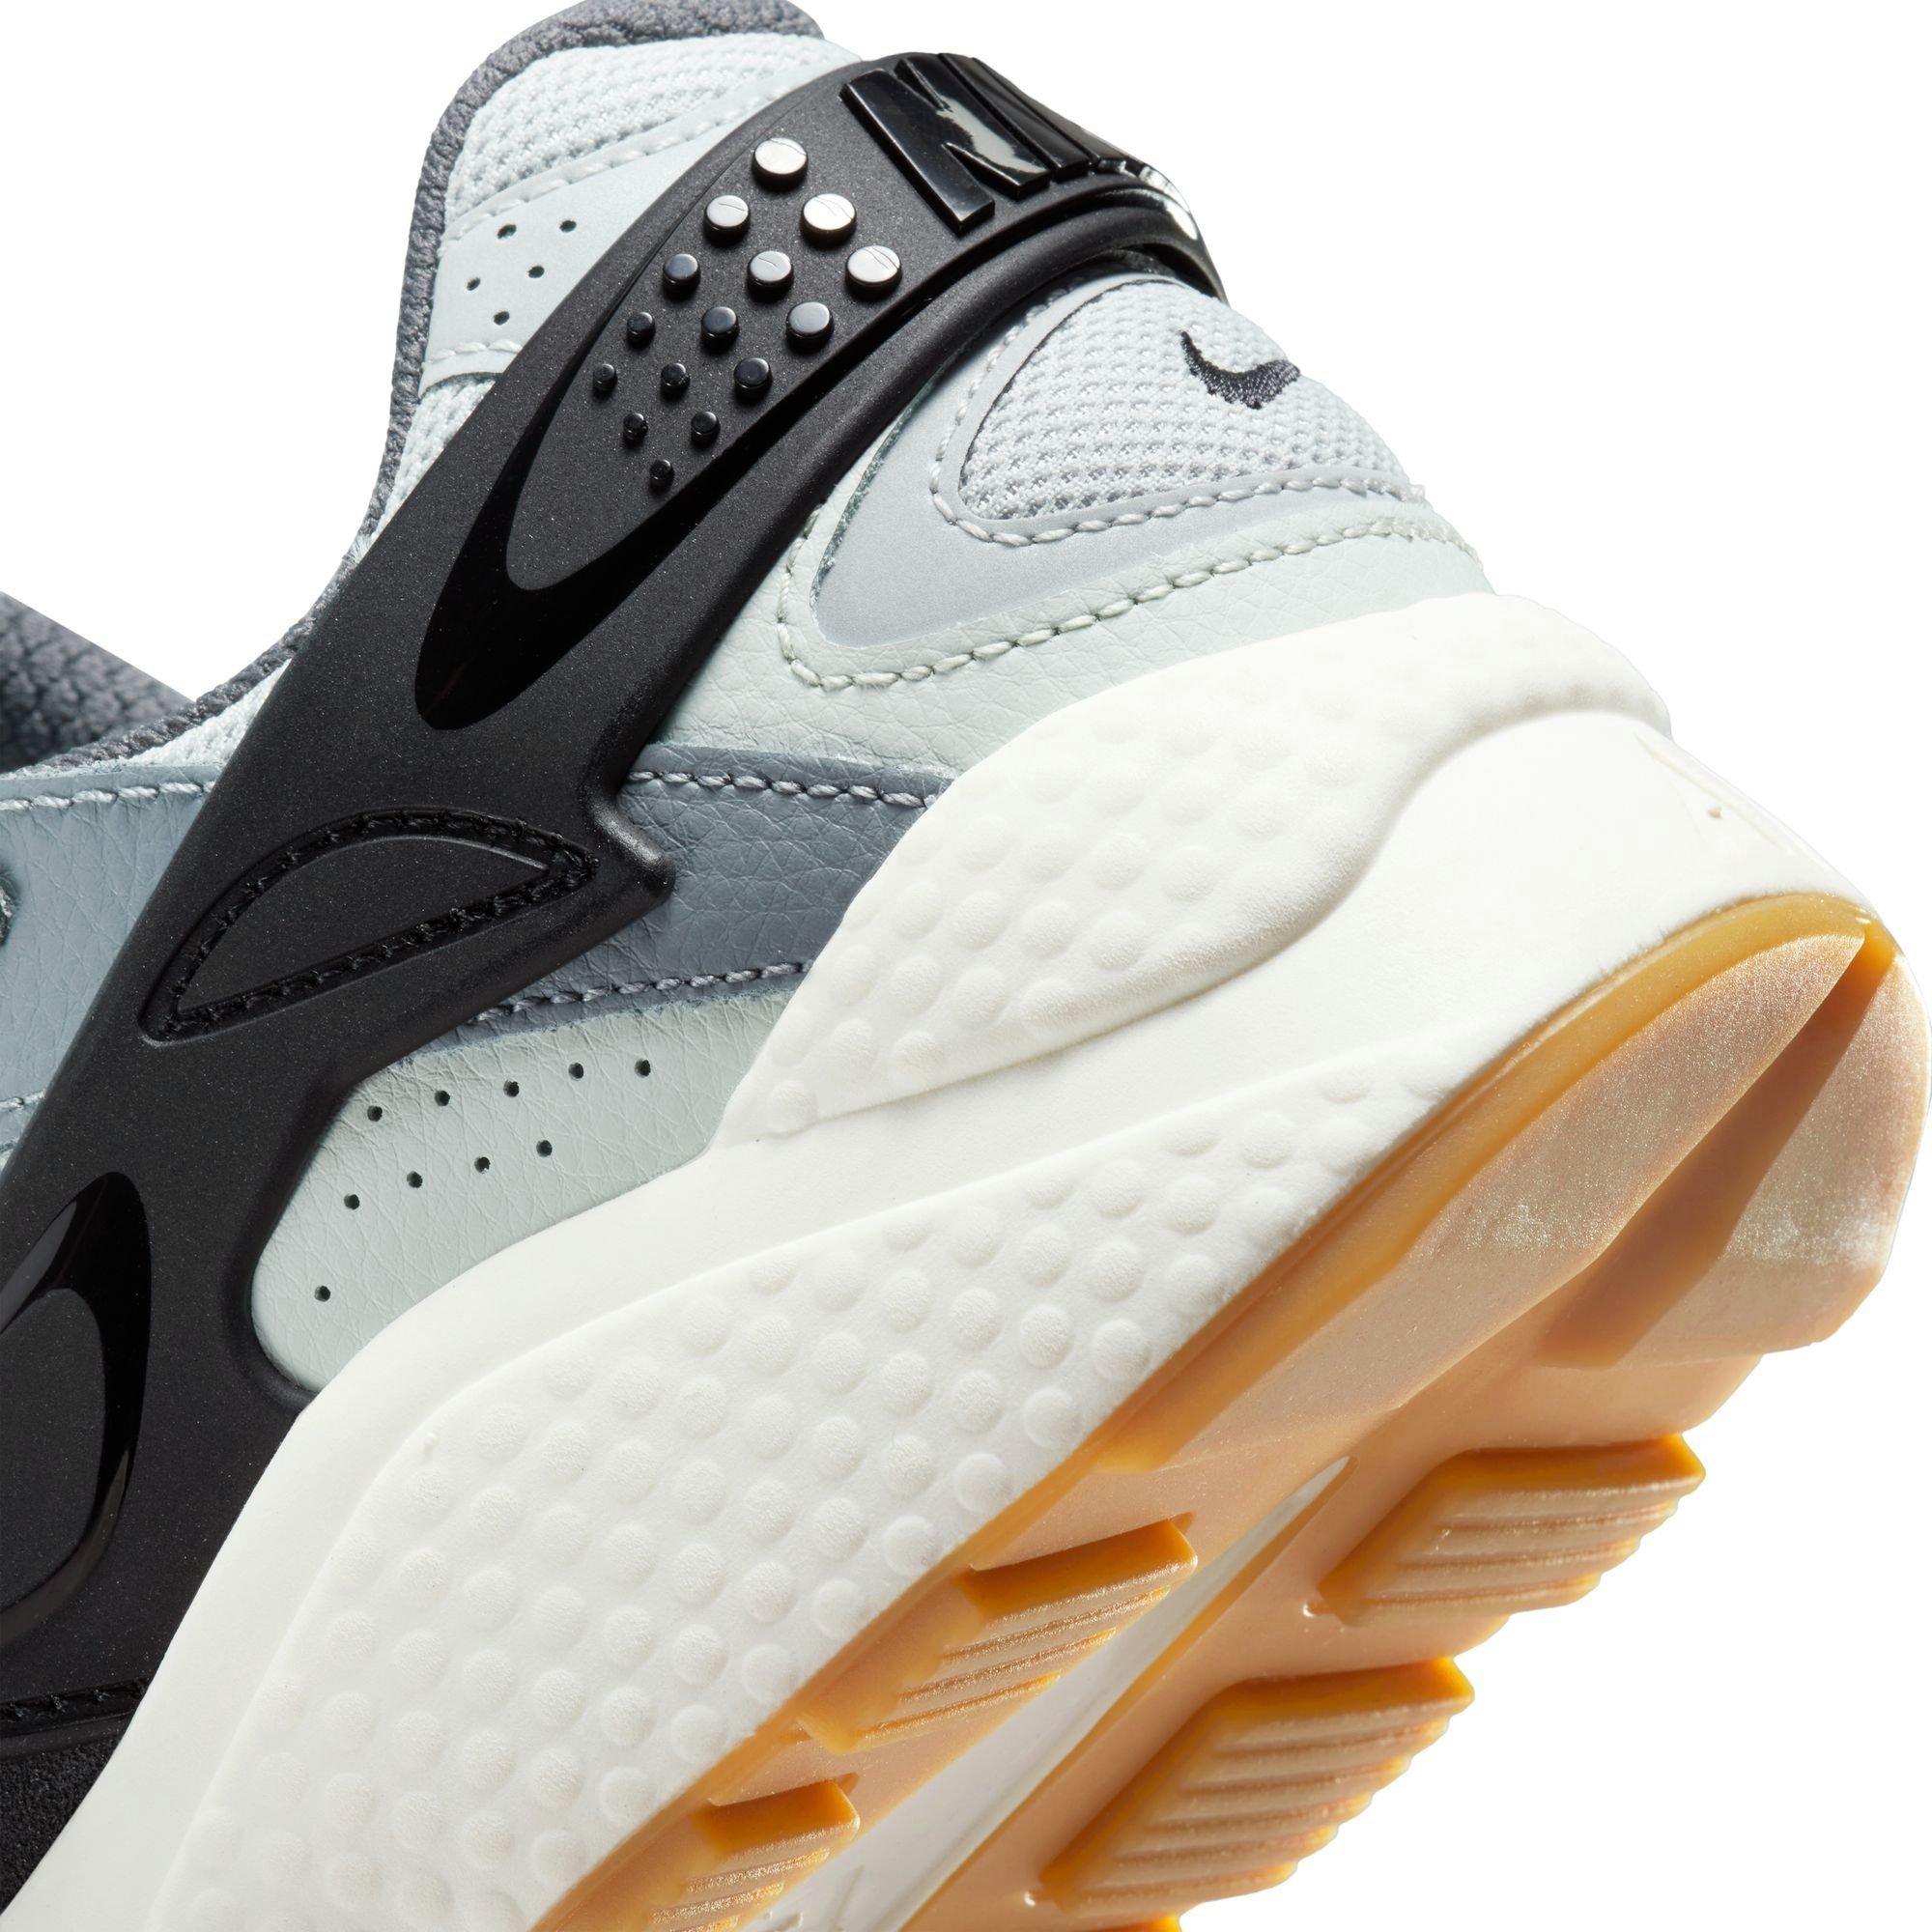 Ongelofelijk Intrekking krassen Nike Air Huarache Runner "Light Smoke Grey" Men's Shoe